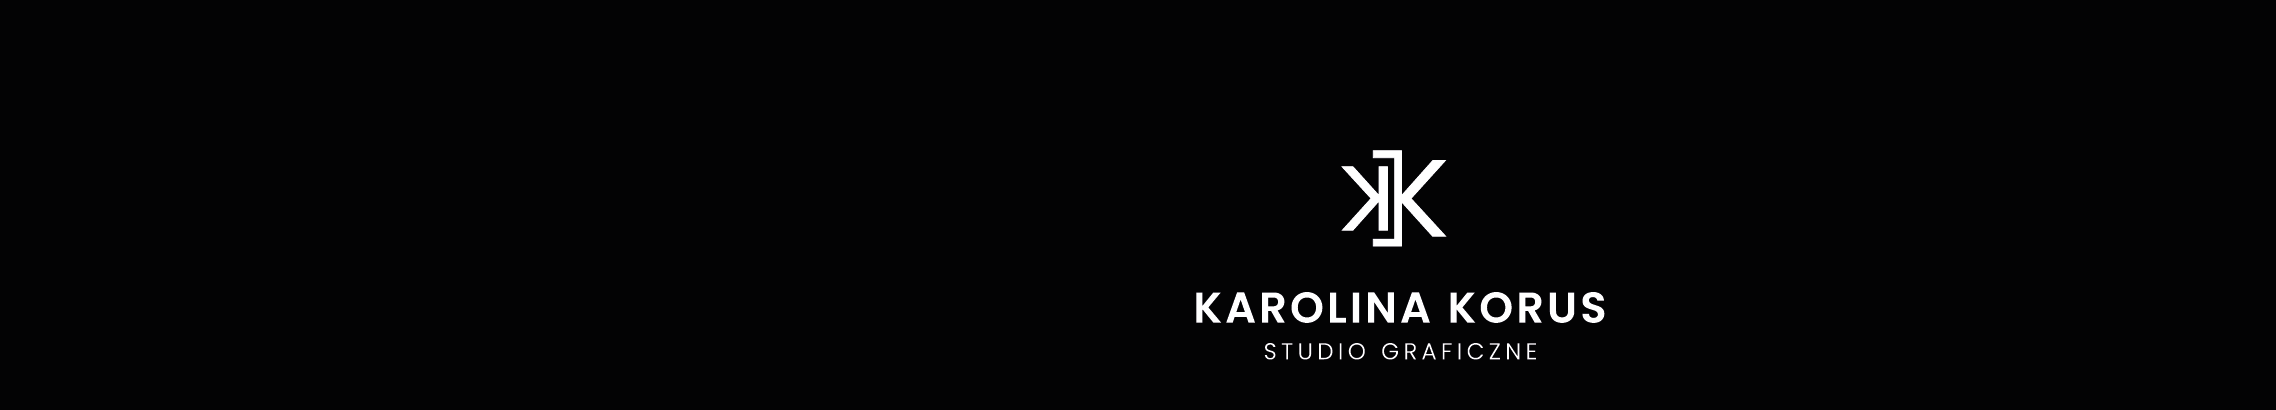 Karolina Korus のプロファイルバナー